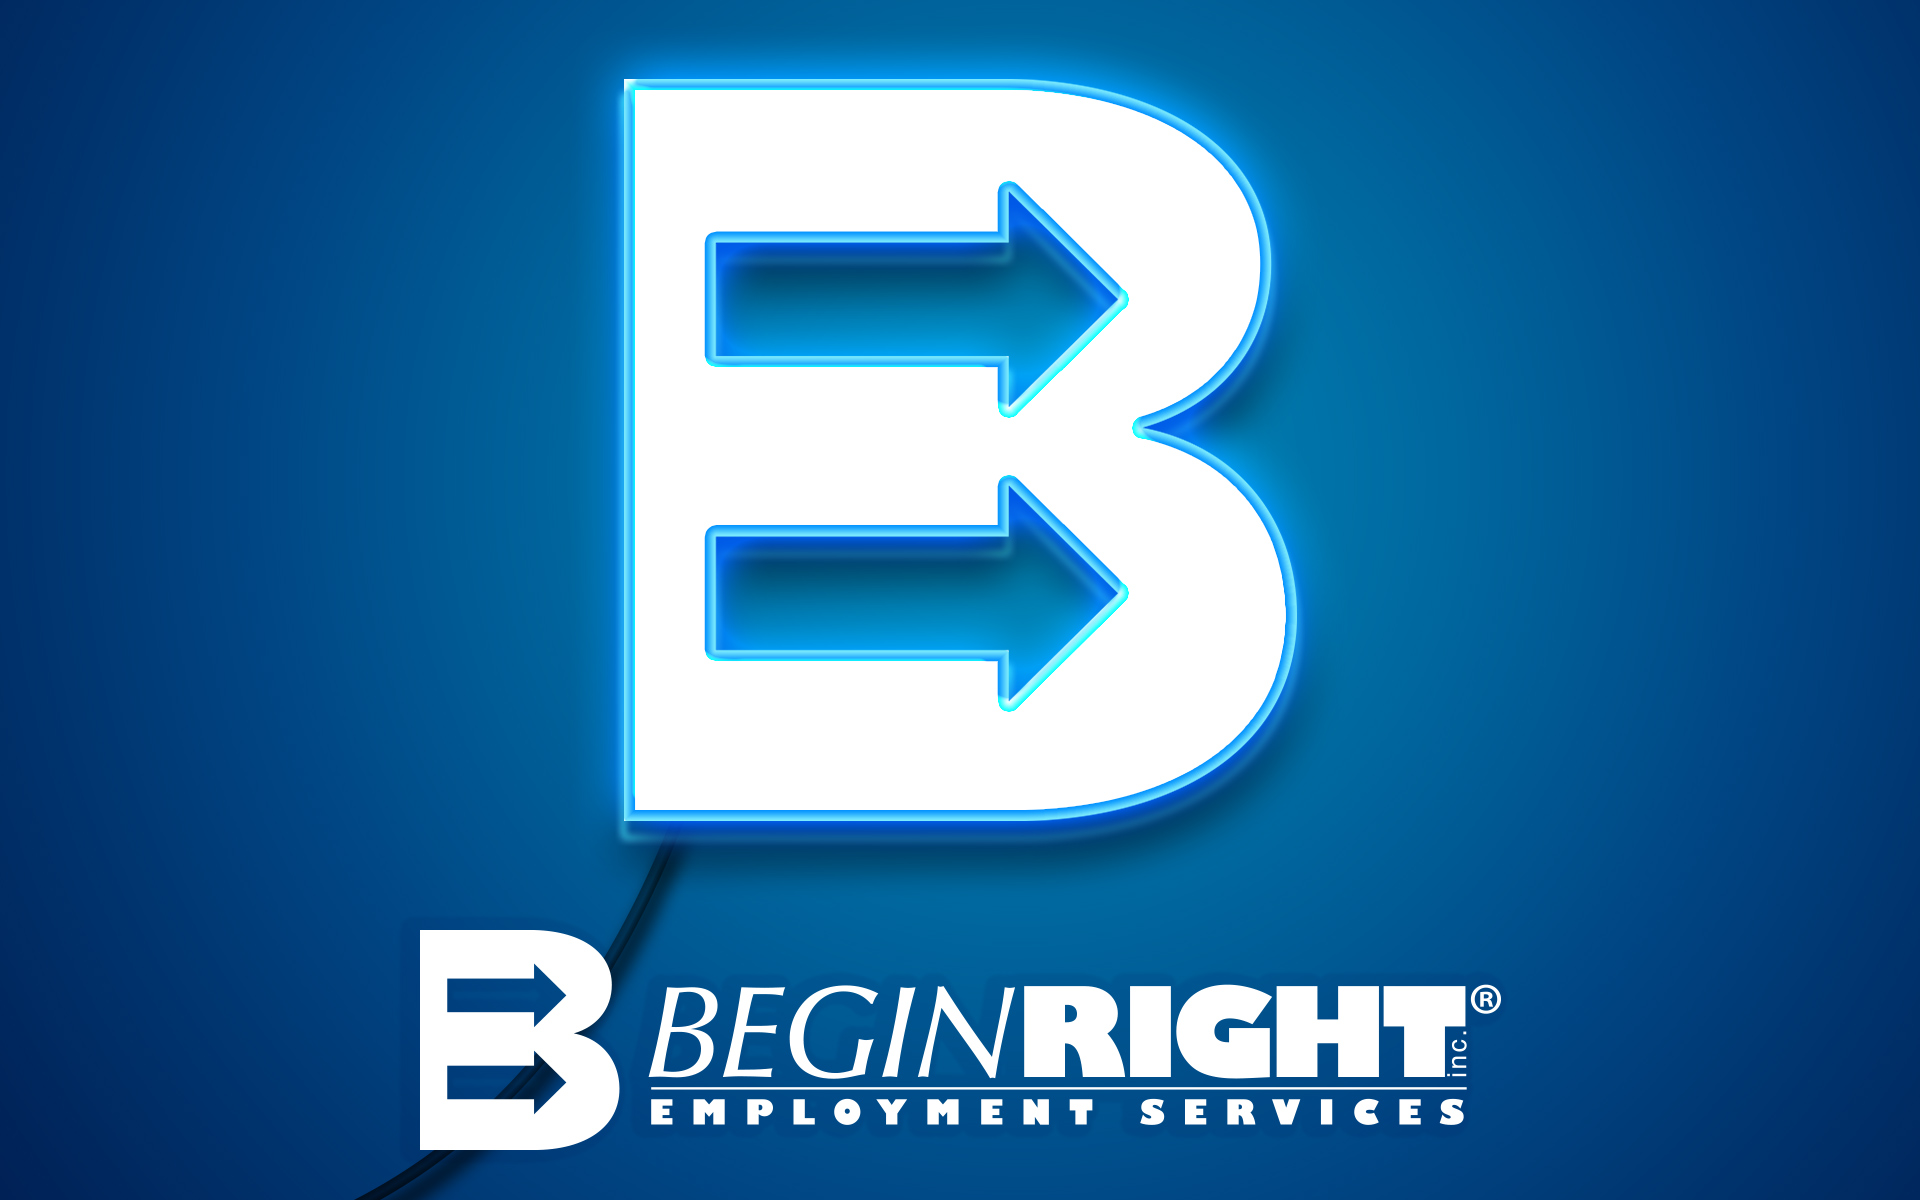 The BeginRight Employment Services Team